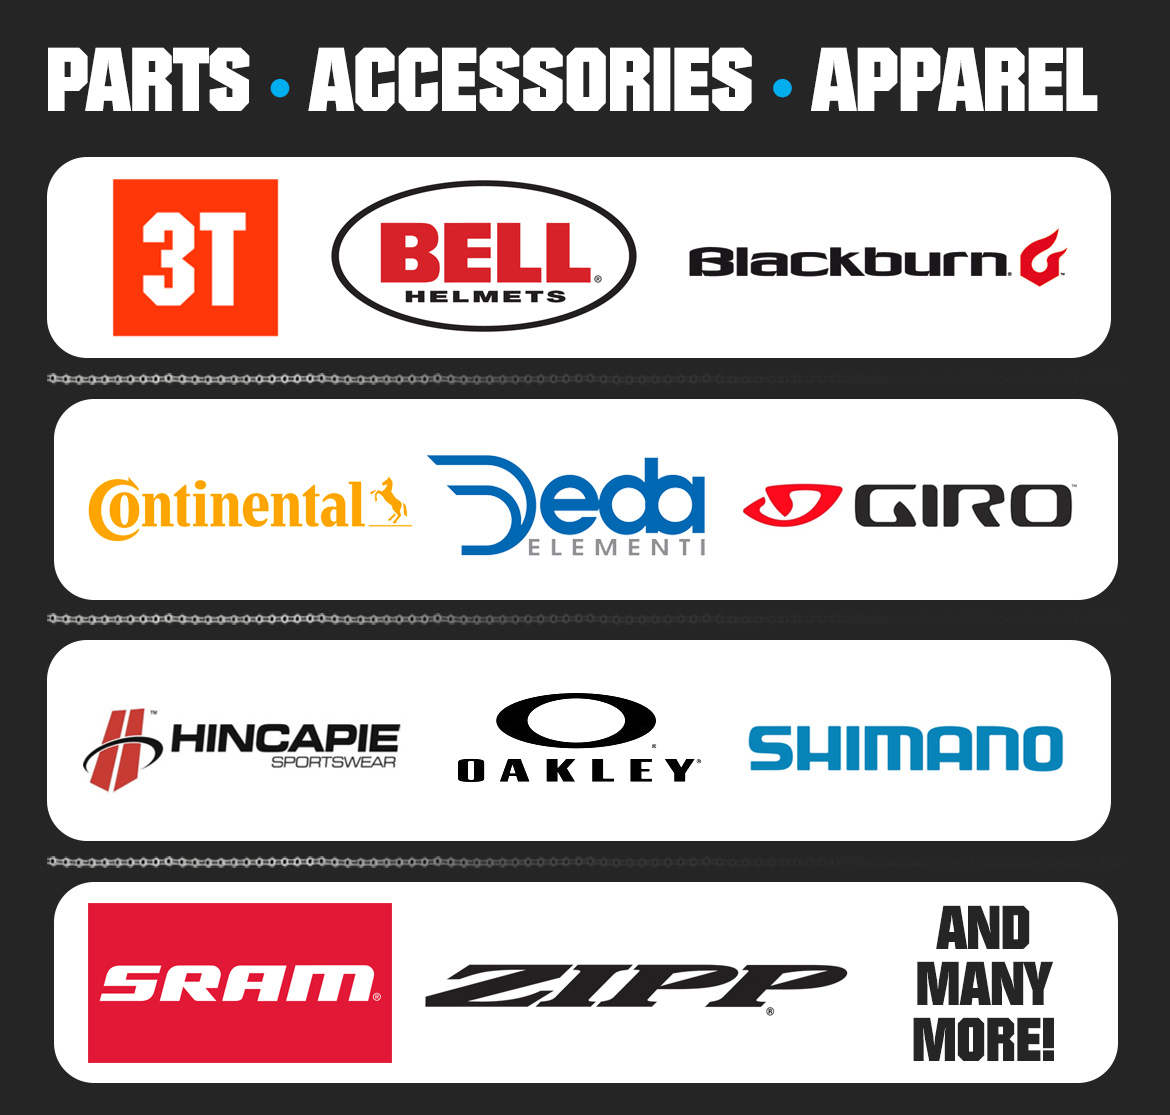 Bicycle Parts Acessories and Apparel Indianapolis. Bell, Zipp, Sram, Shimano, Hincapie, Scott, Blacburn, Oakley, 3T